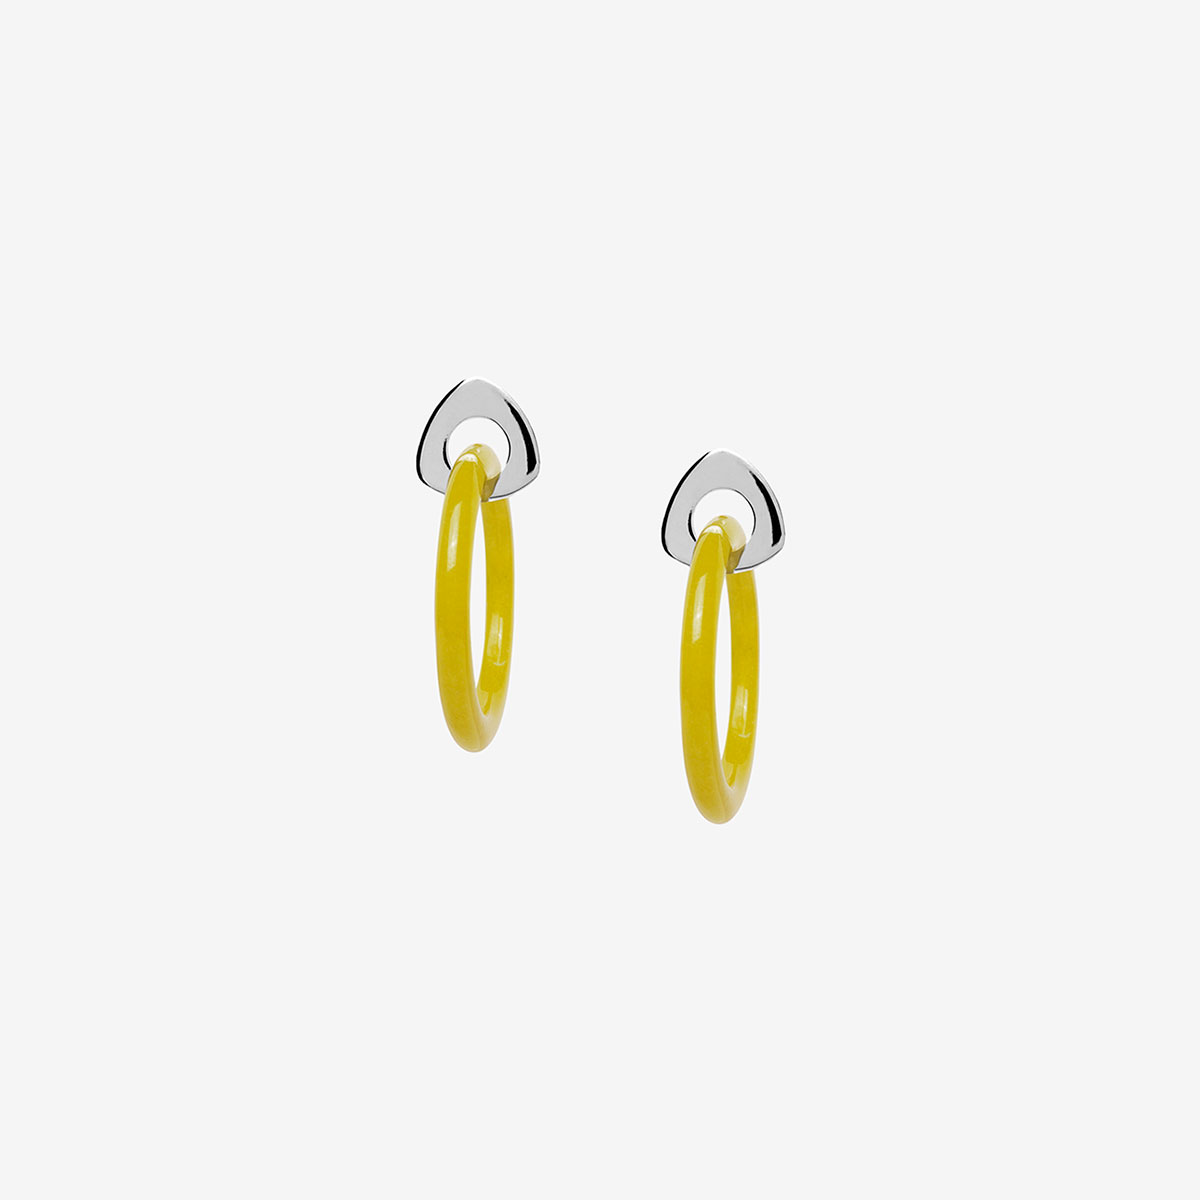 handmade Lya earrings in sterling silver and yellow agate designed by Belen Bajo